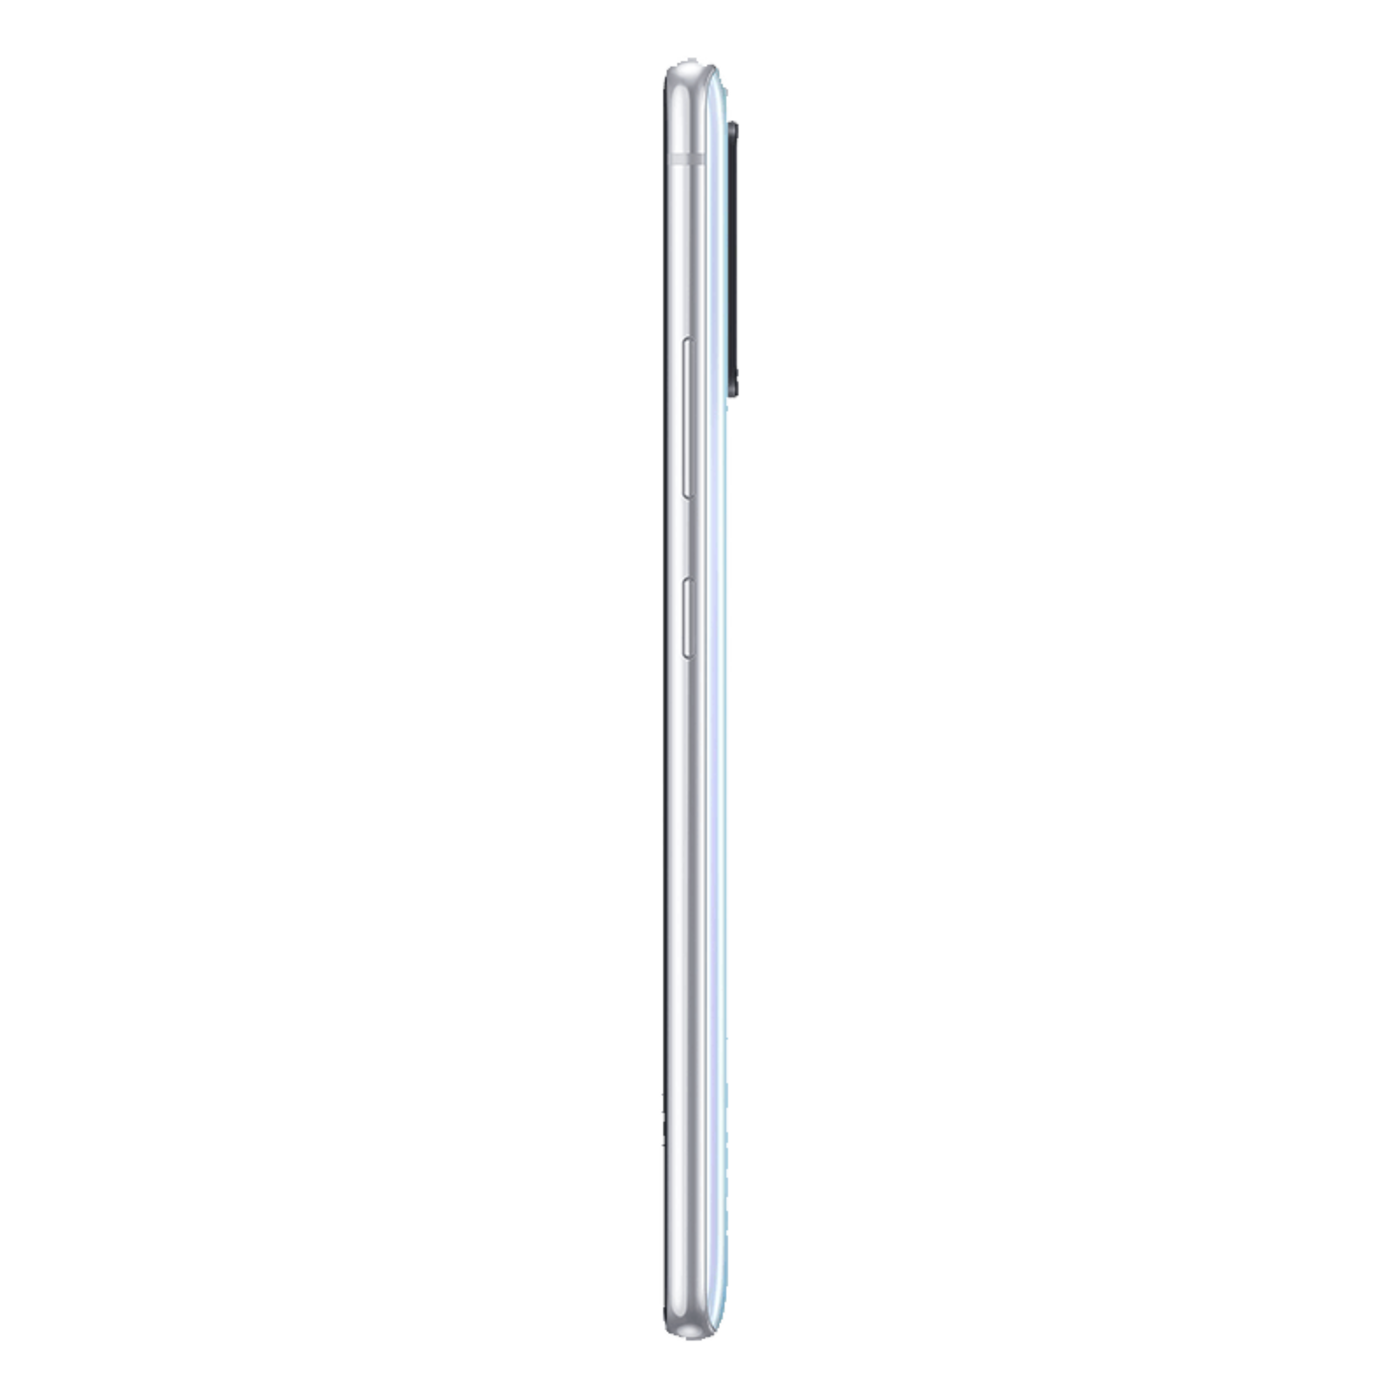 Celular SAMSUNG Galaxy S10 LITE 128 GB Blanco